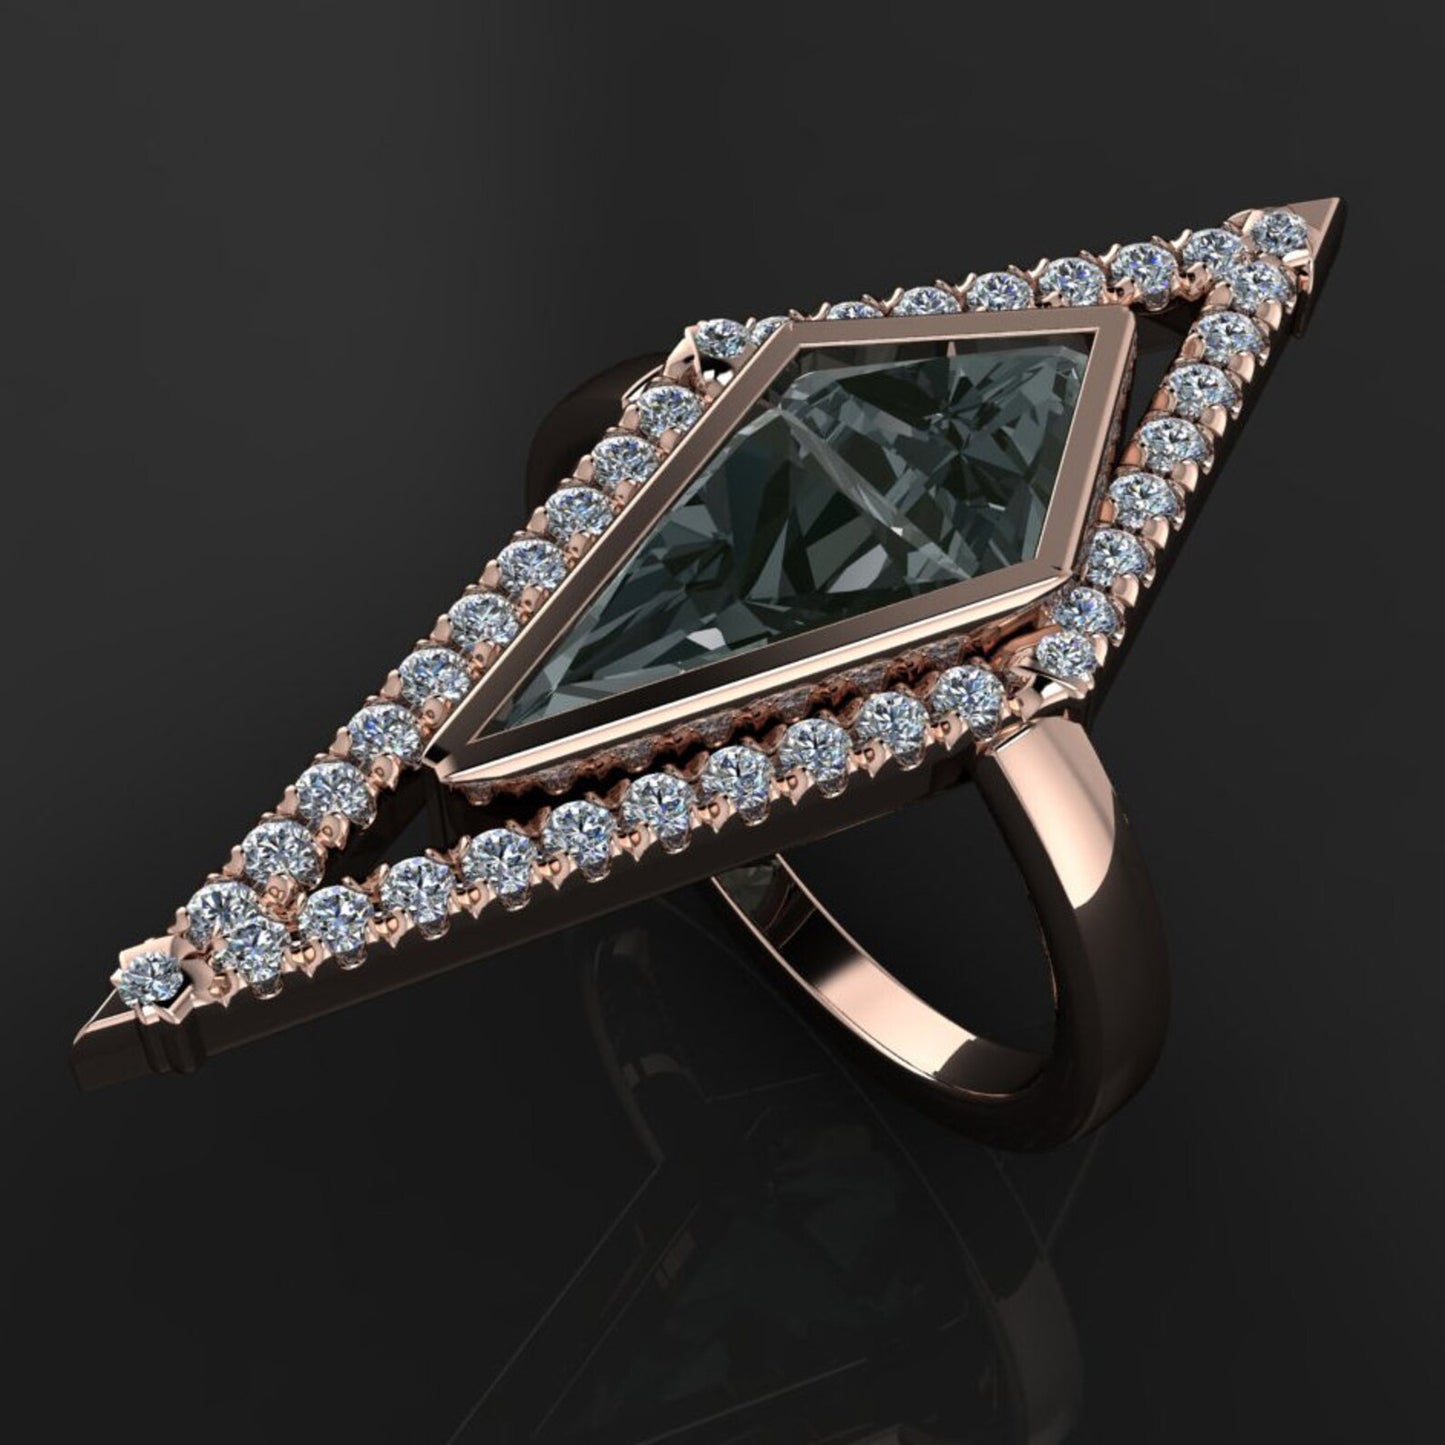 atlas ring - 2.5 carat kite shaped moissanite and diamond ring, ZAYA Moissanite - J Hollywood Designs